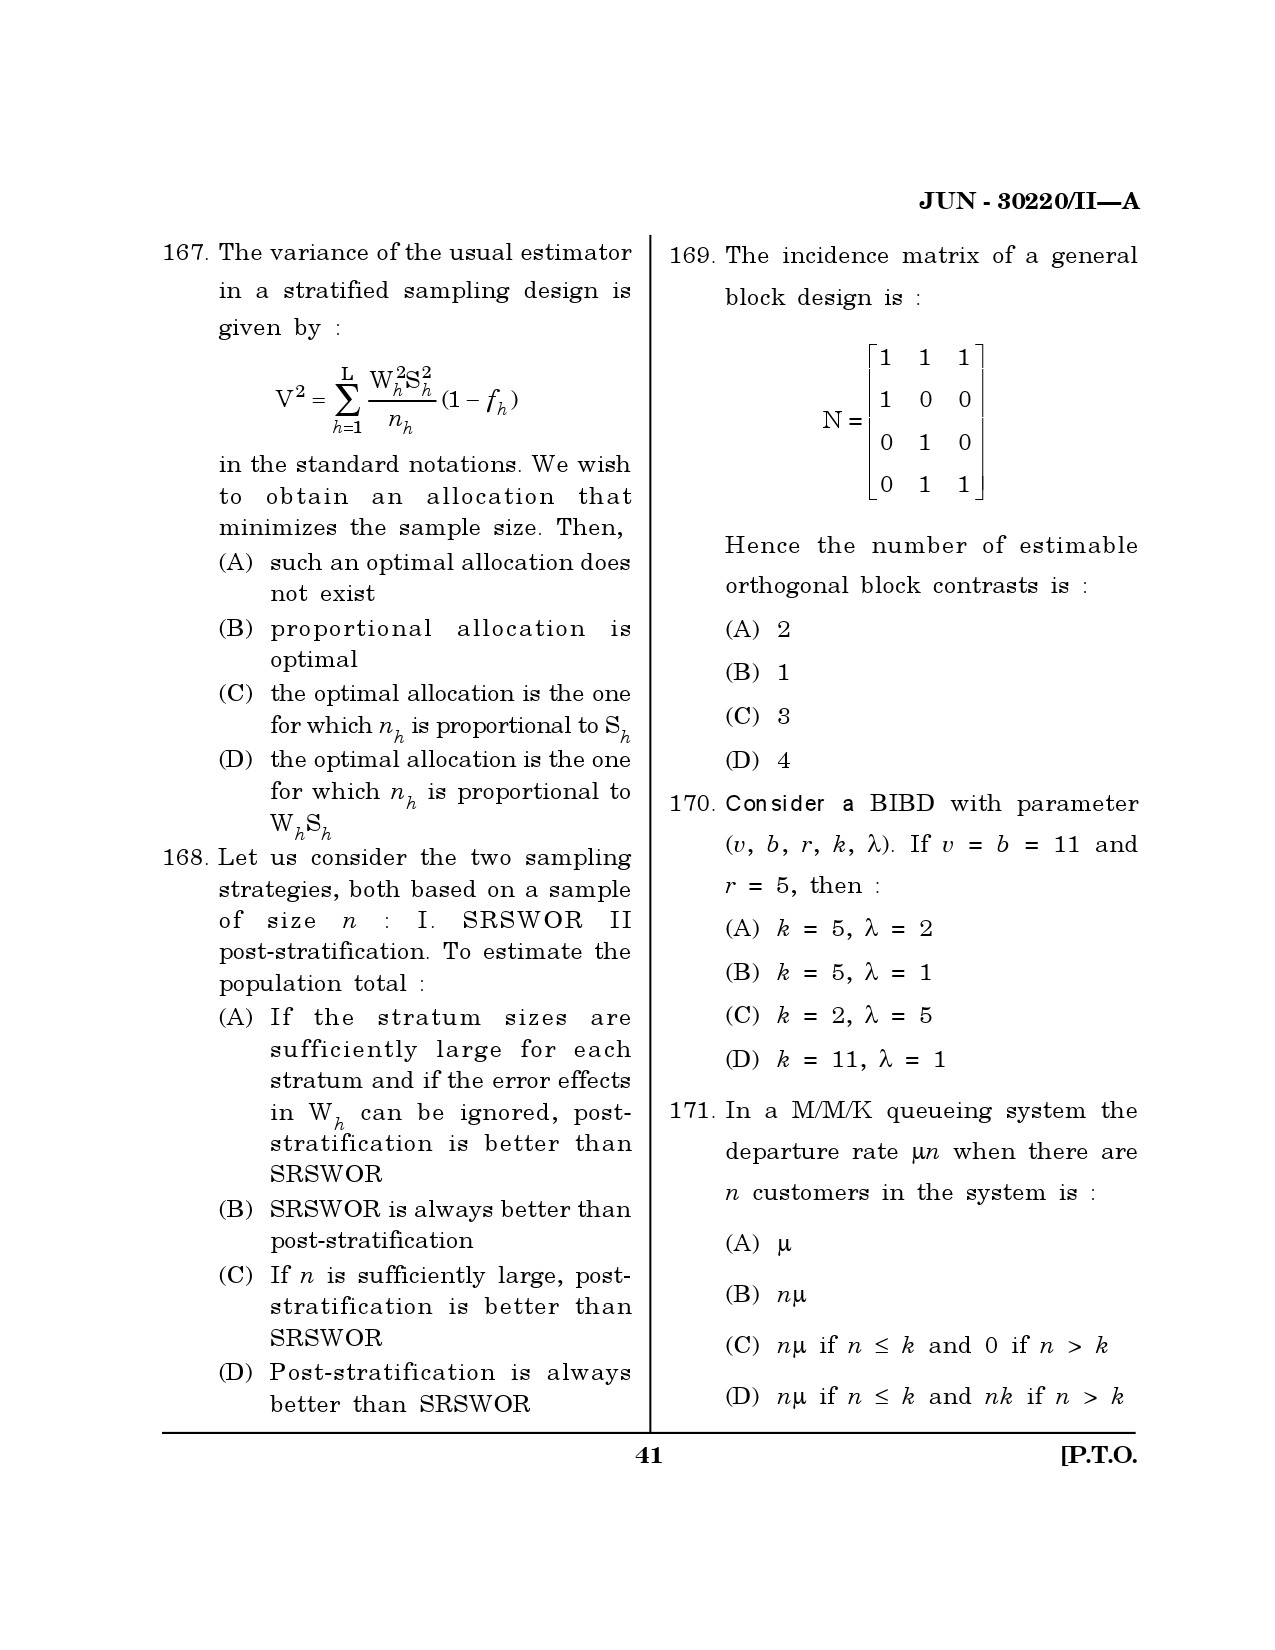 Maharashtra SET Mathematical Sciences Question Paper II June 2020 40